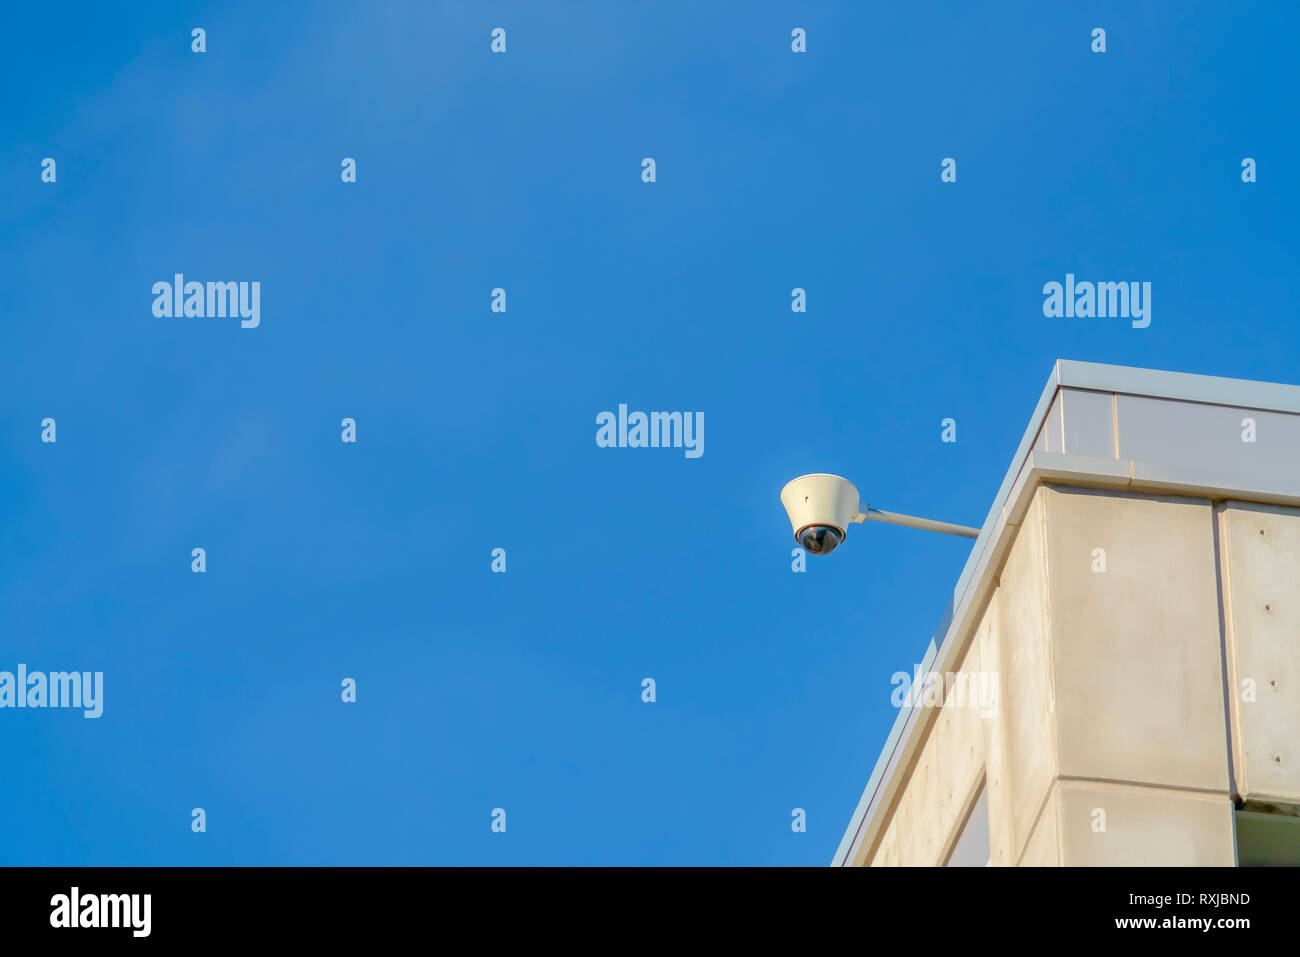 Overhead Surveillance CCTV security camera 360 degree Stock Photo - Alamy